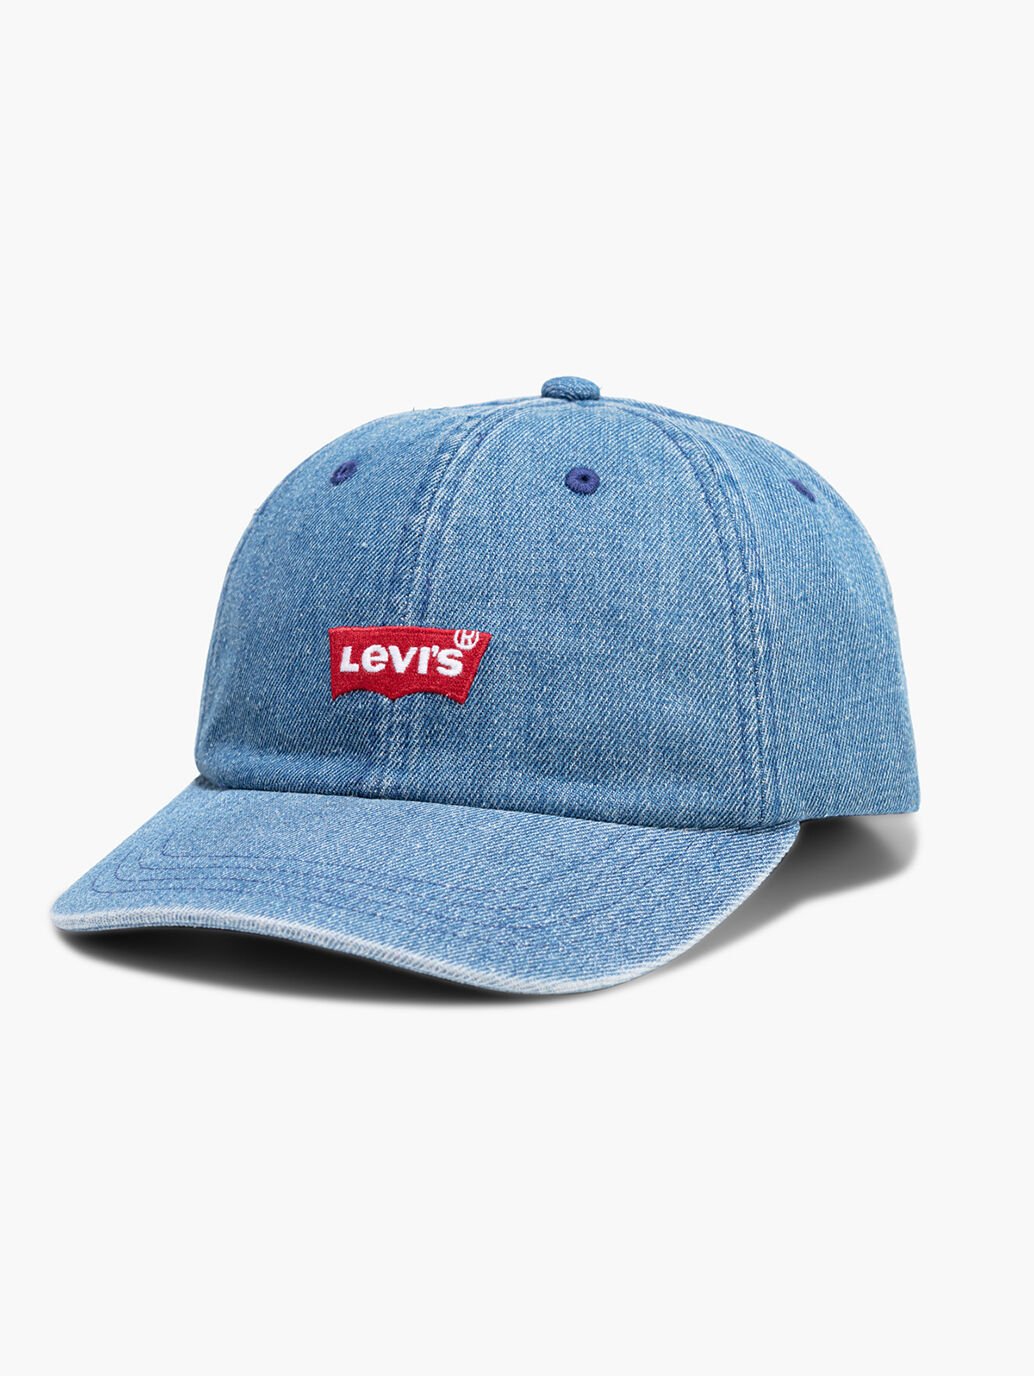 LEVI'S Denim Snapback Cap with Batwing Logo 'Denim Light Blue'